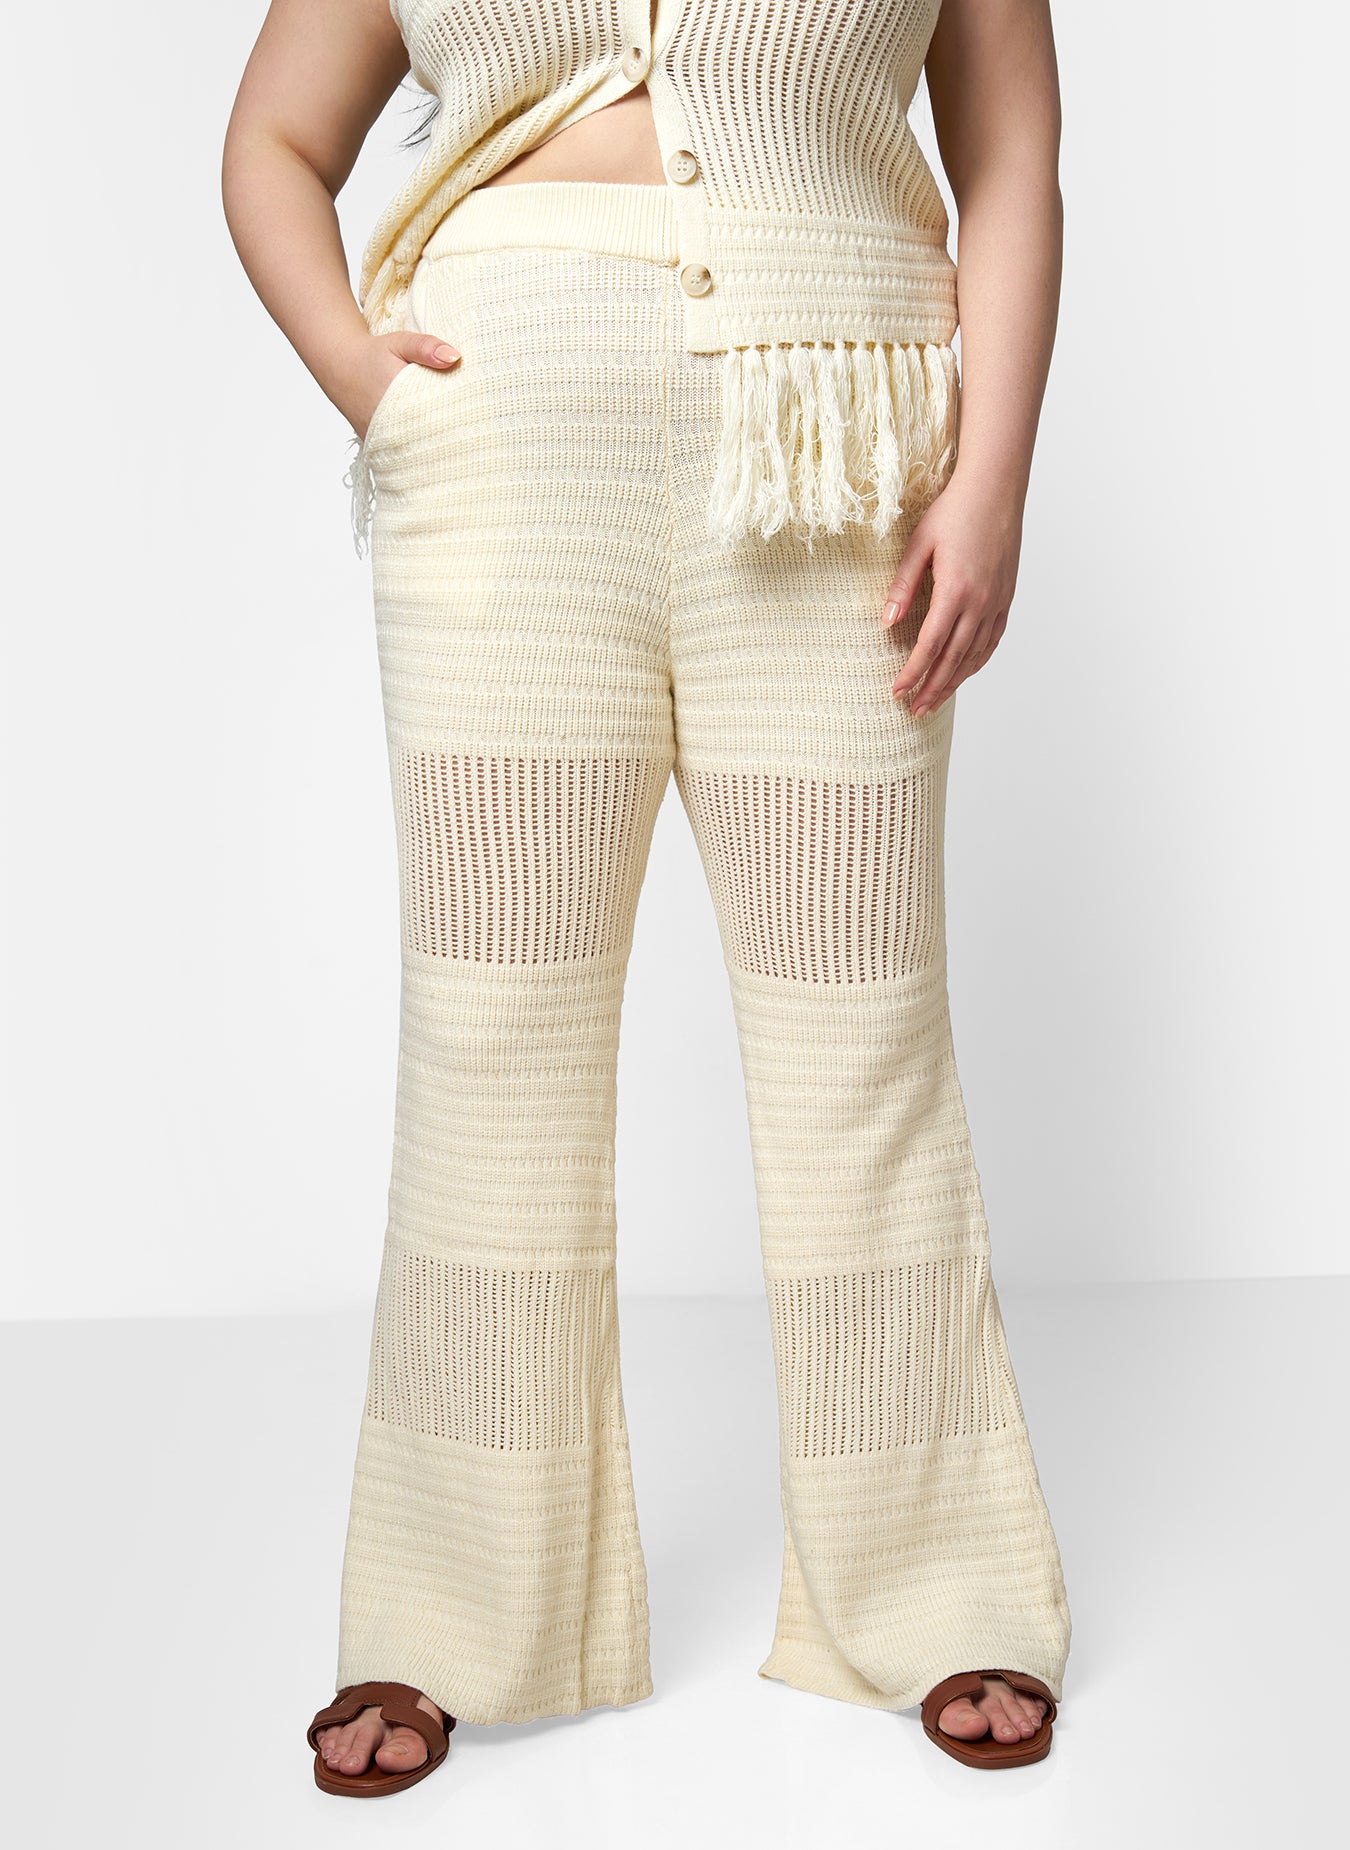 Aisha Knit Bell Bottom Pants W. Pockets - Ivory